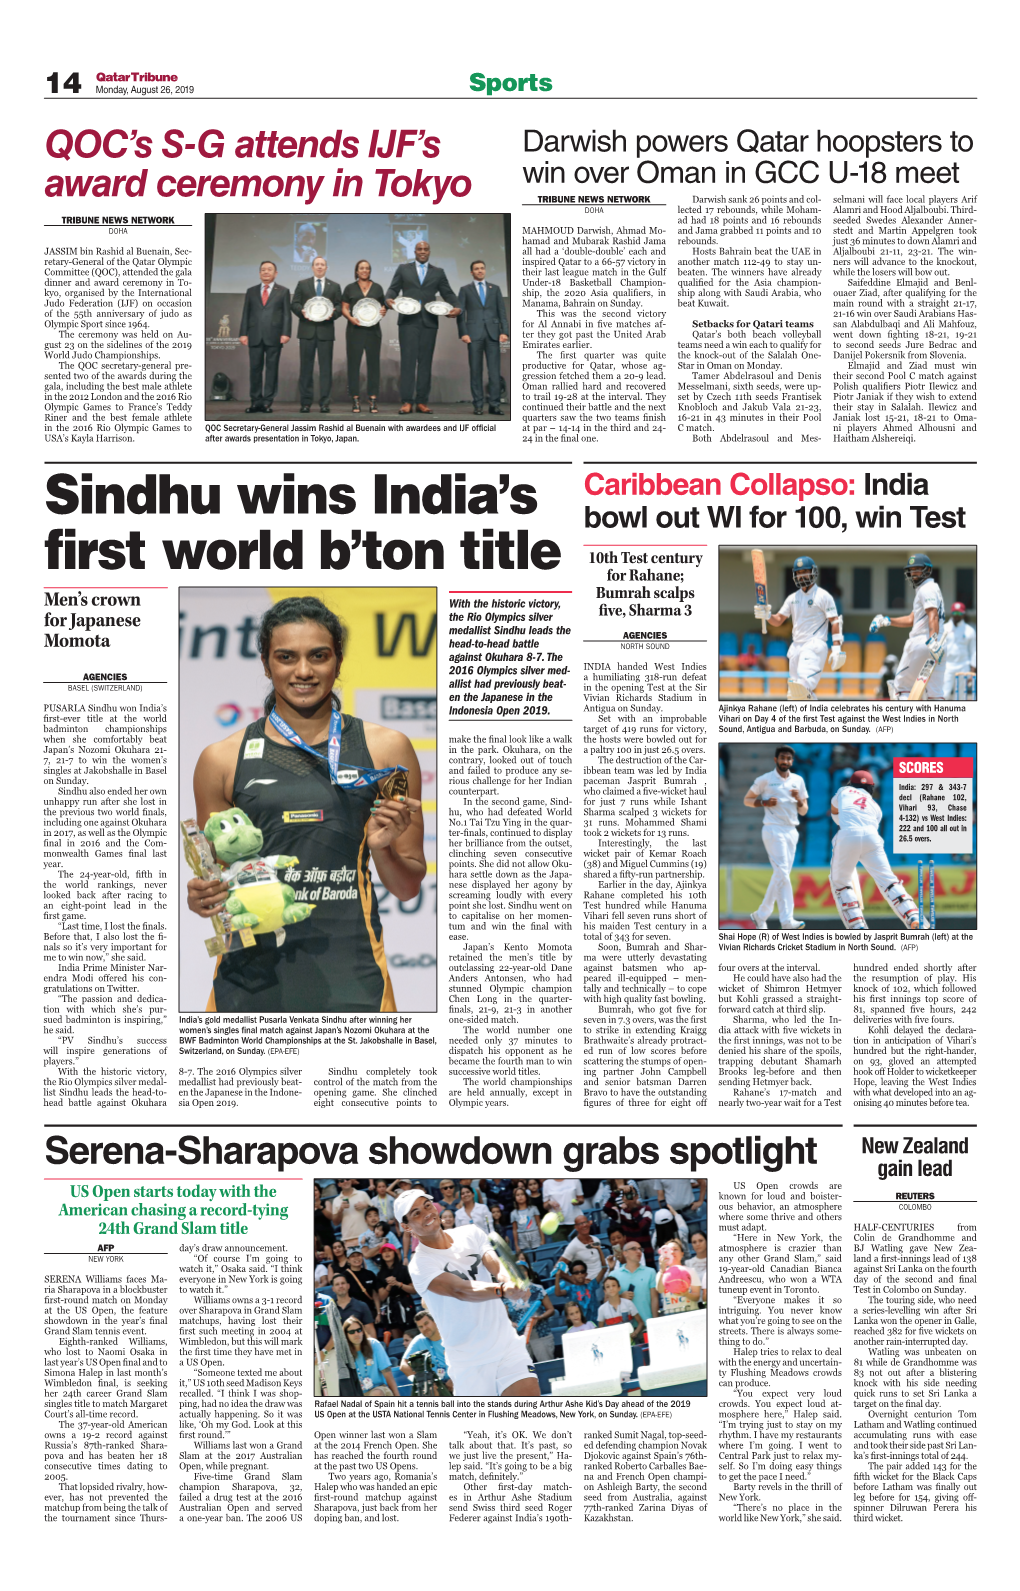 Sindhu Wins India's First World B'ton Title